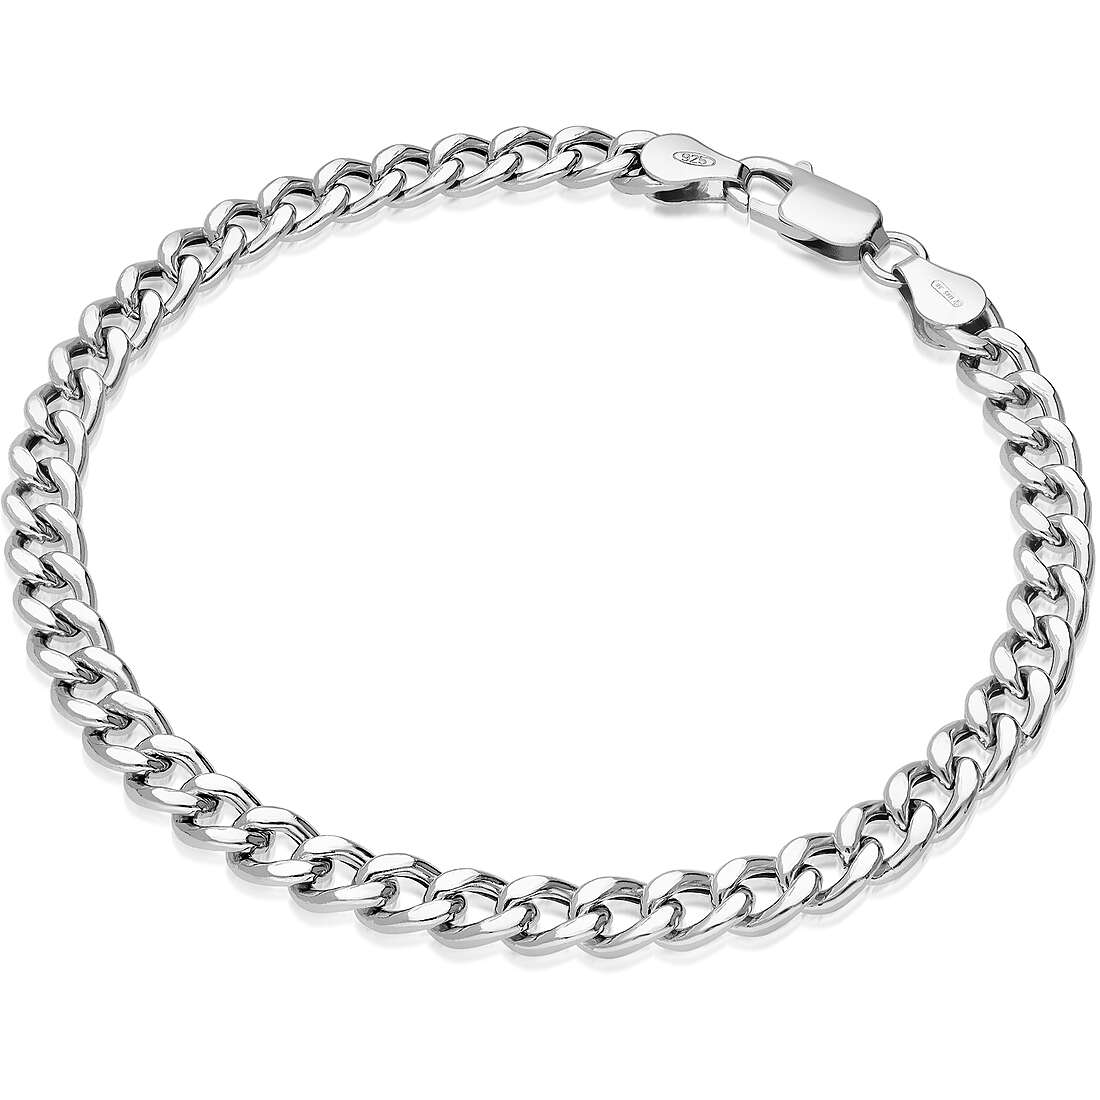 bracelet man Chain 925 Silver jewel GioiaPura DV-24488341